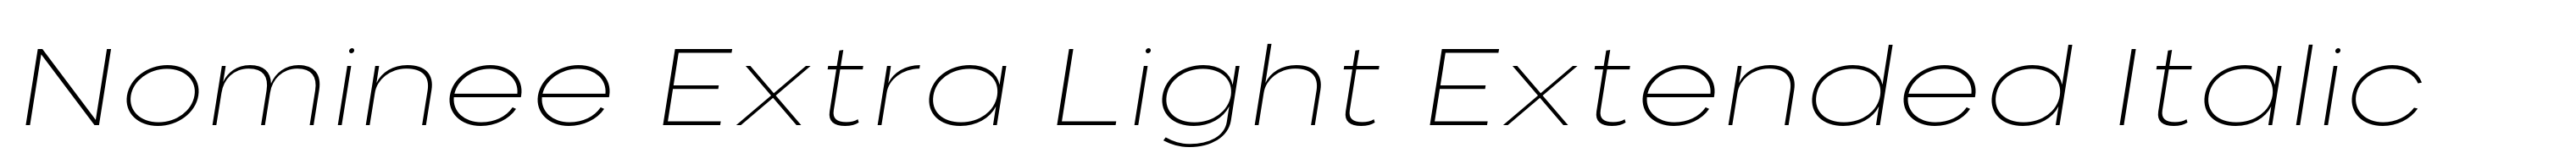 Nominee Extra Light Extended Italic